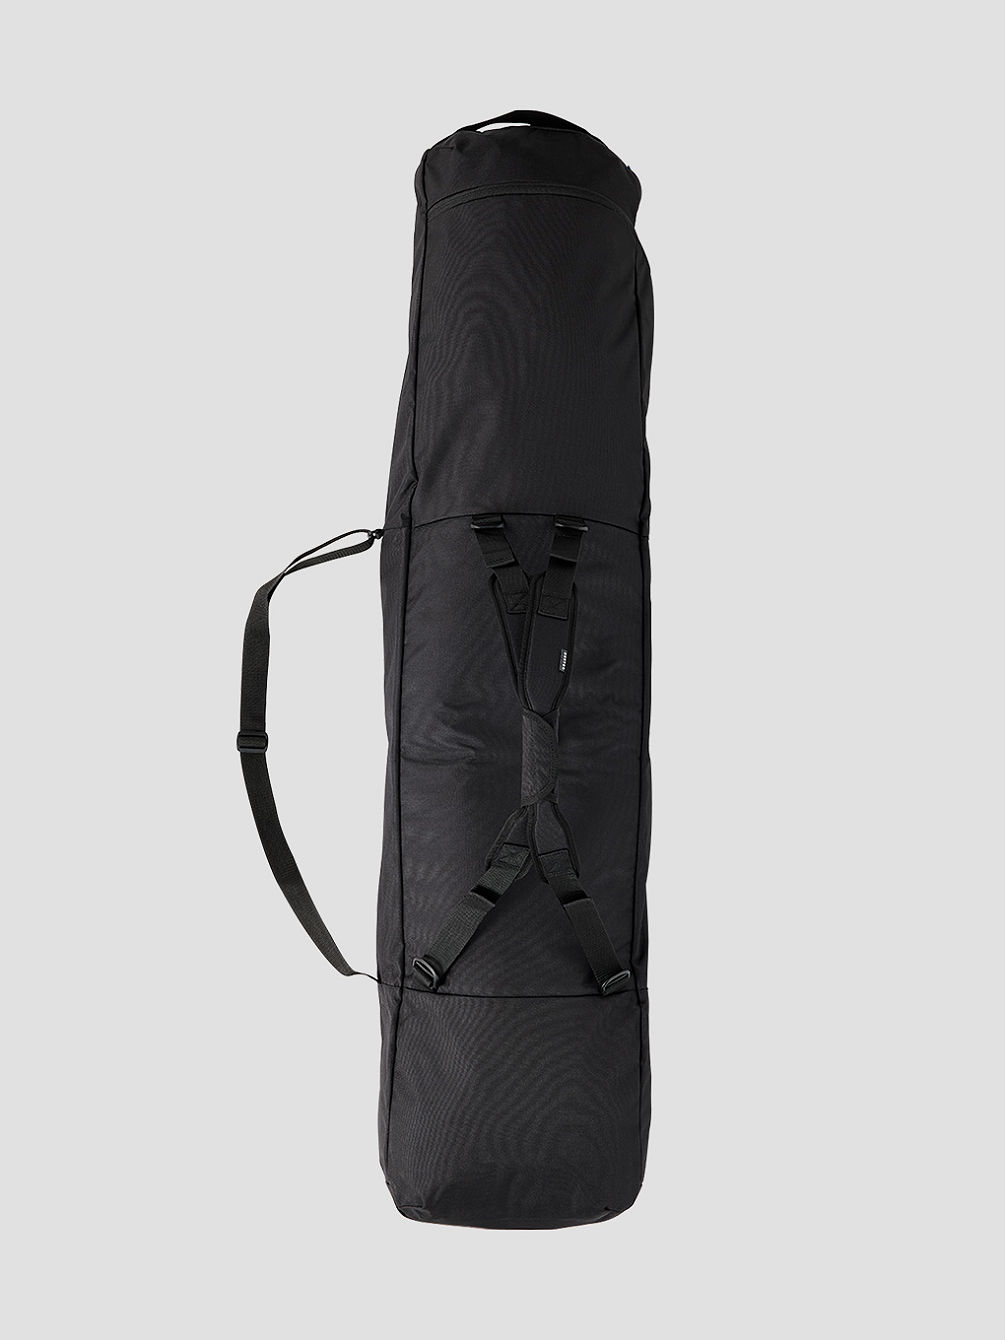 Commuter Space Sack Snowboard Bag